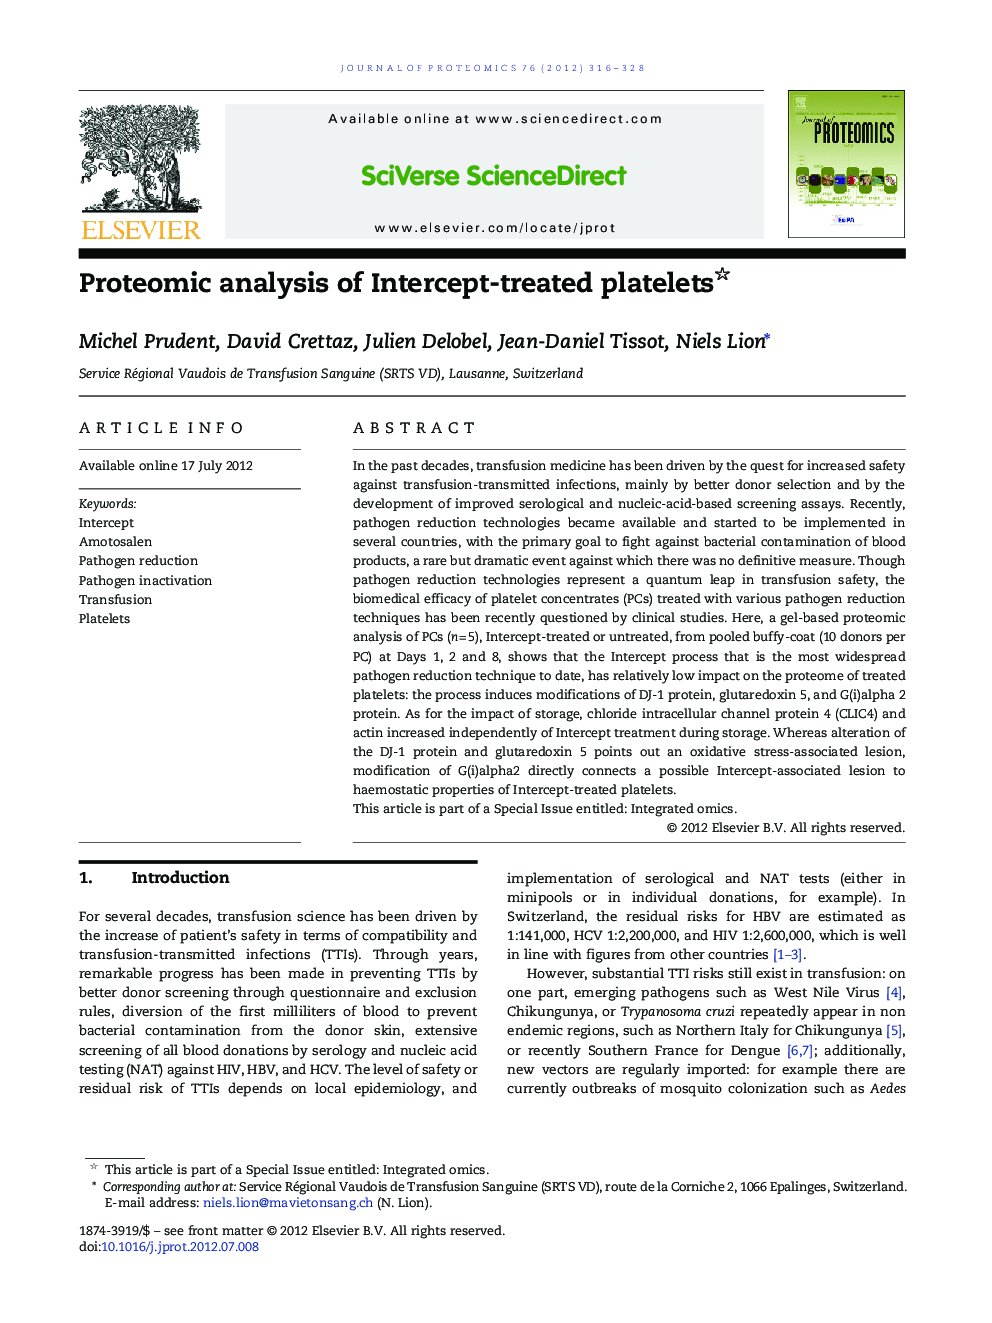 Proteomic analysis of Intercept-treated platelets